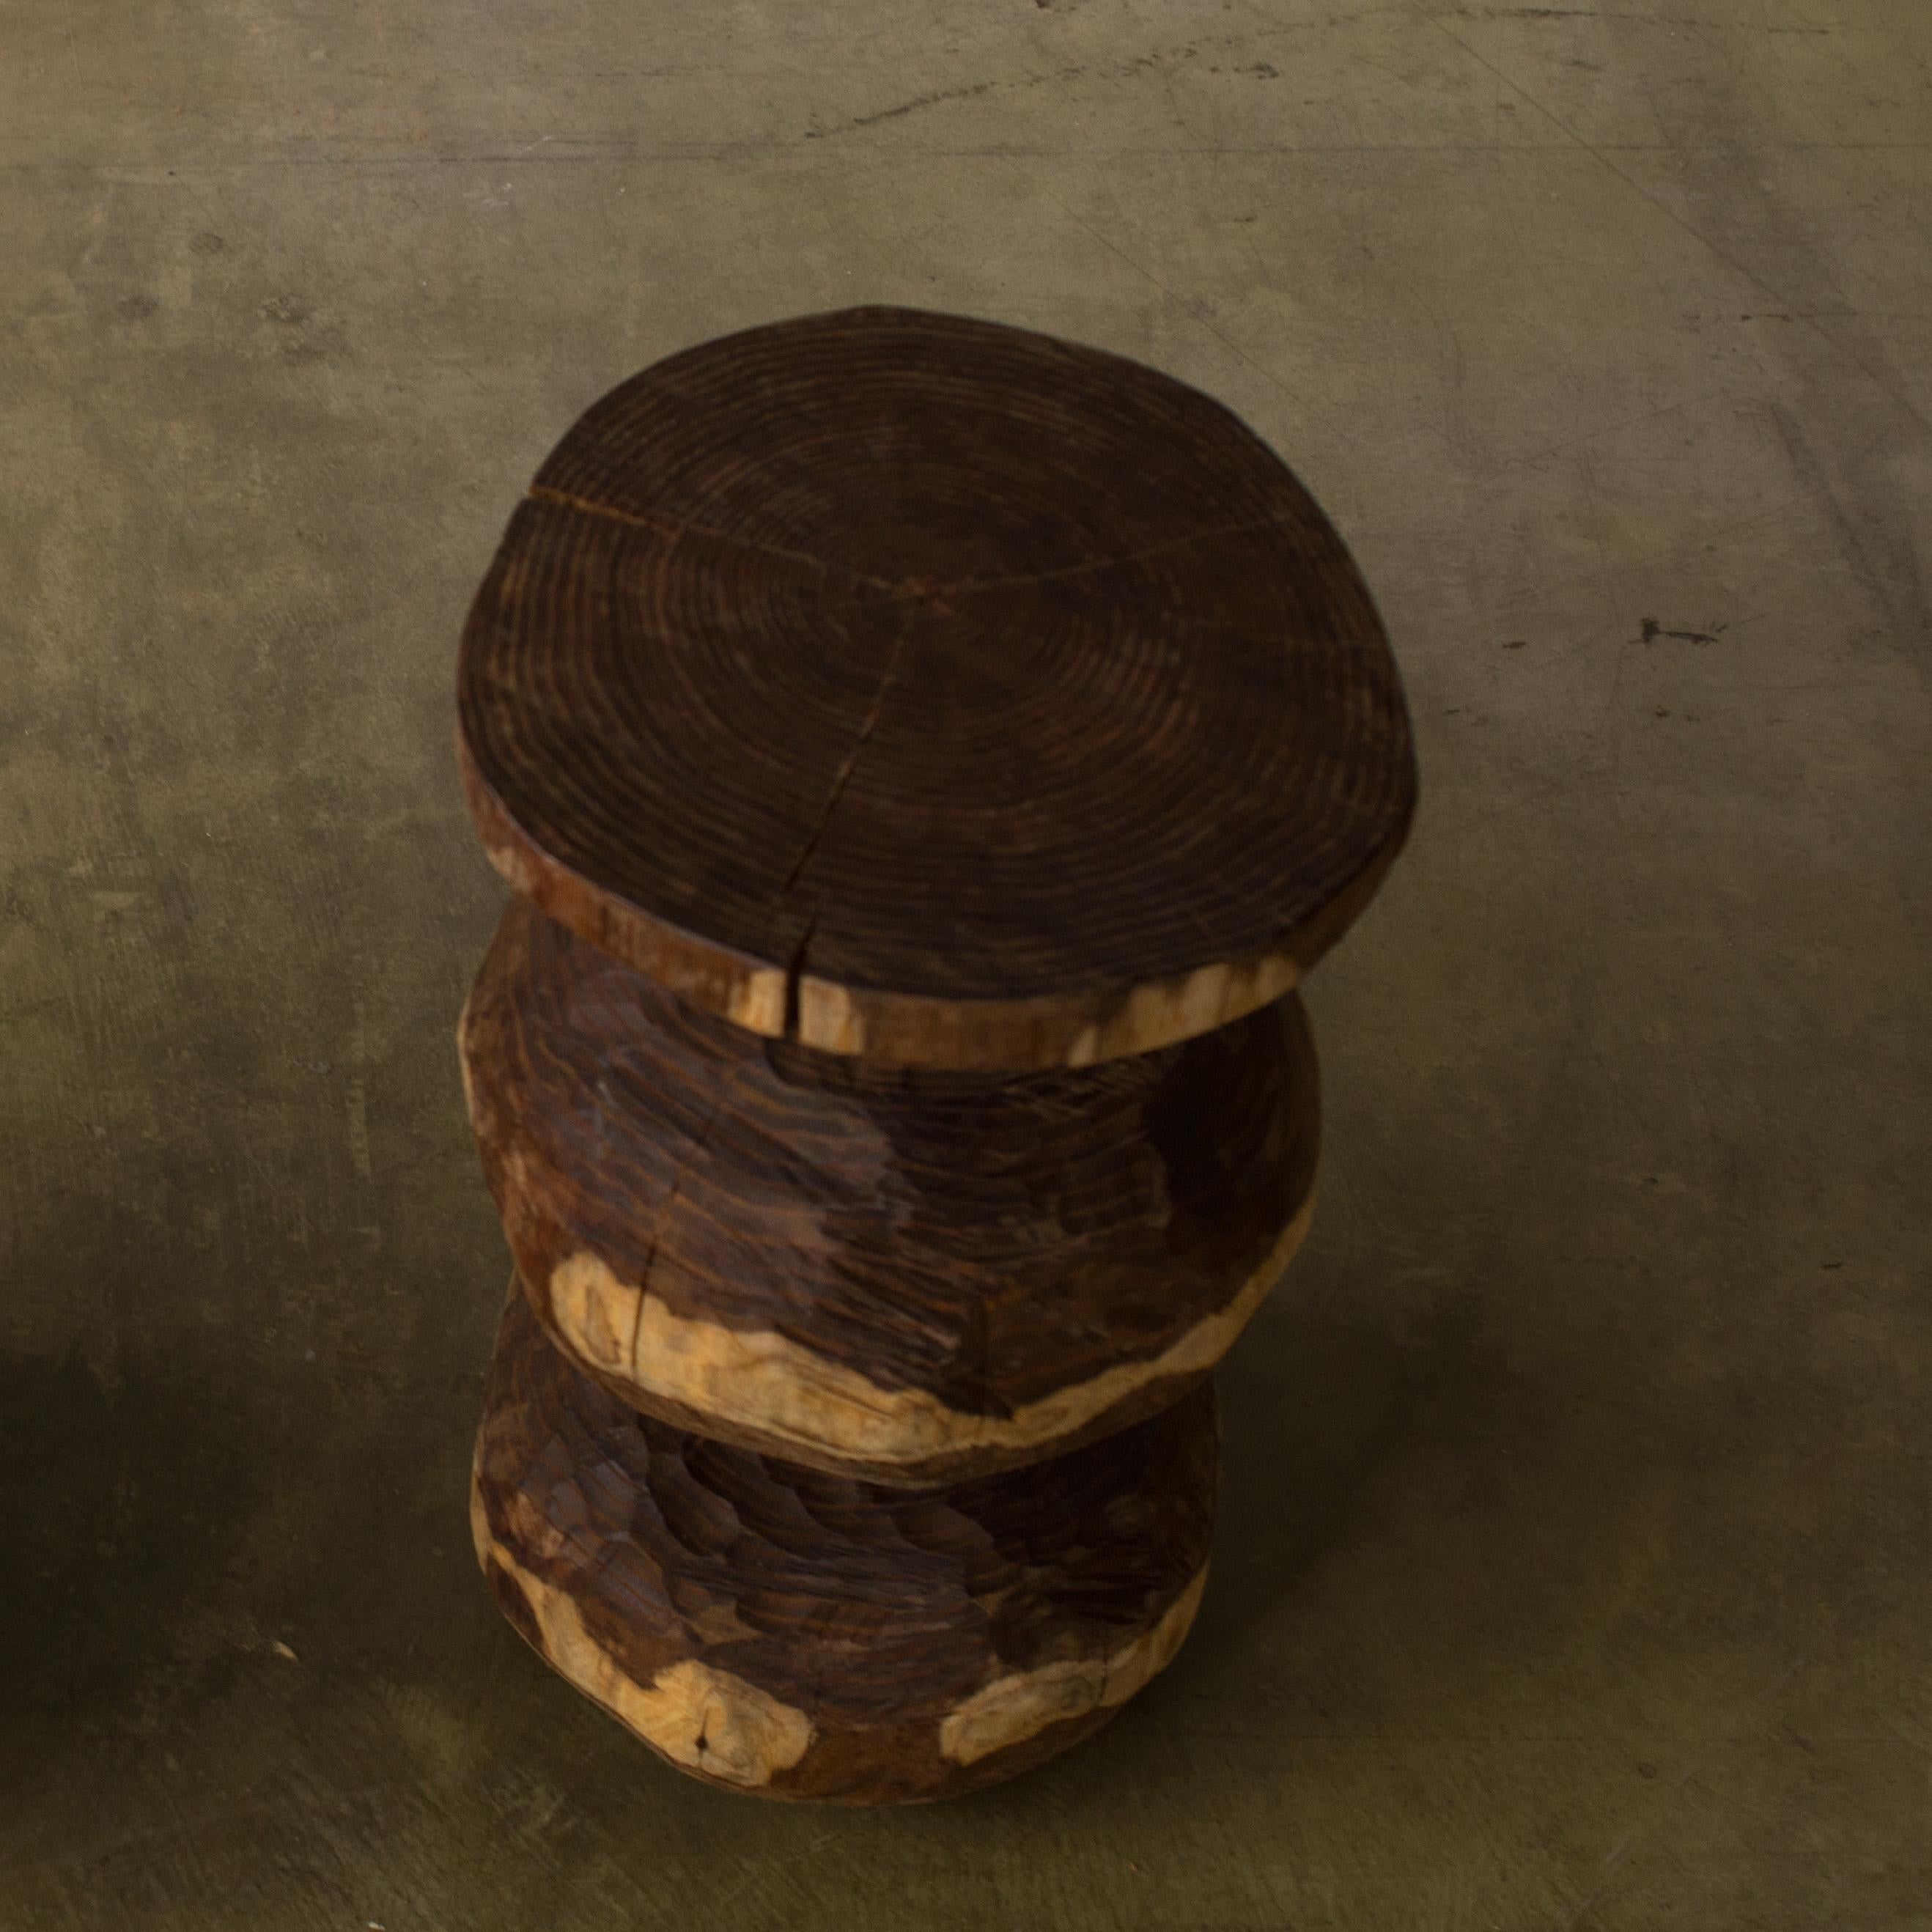 Contemporary Hiroyuki Nishimura Furniture Sculptural Wood Stool10-08 Tribal Glamping